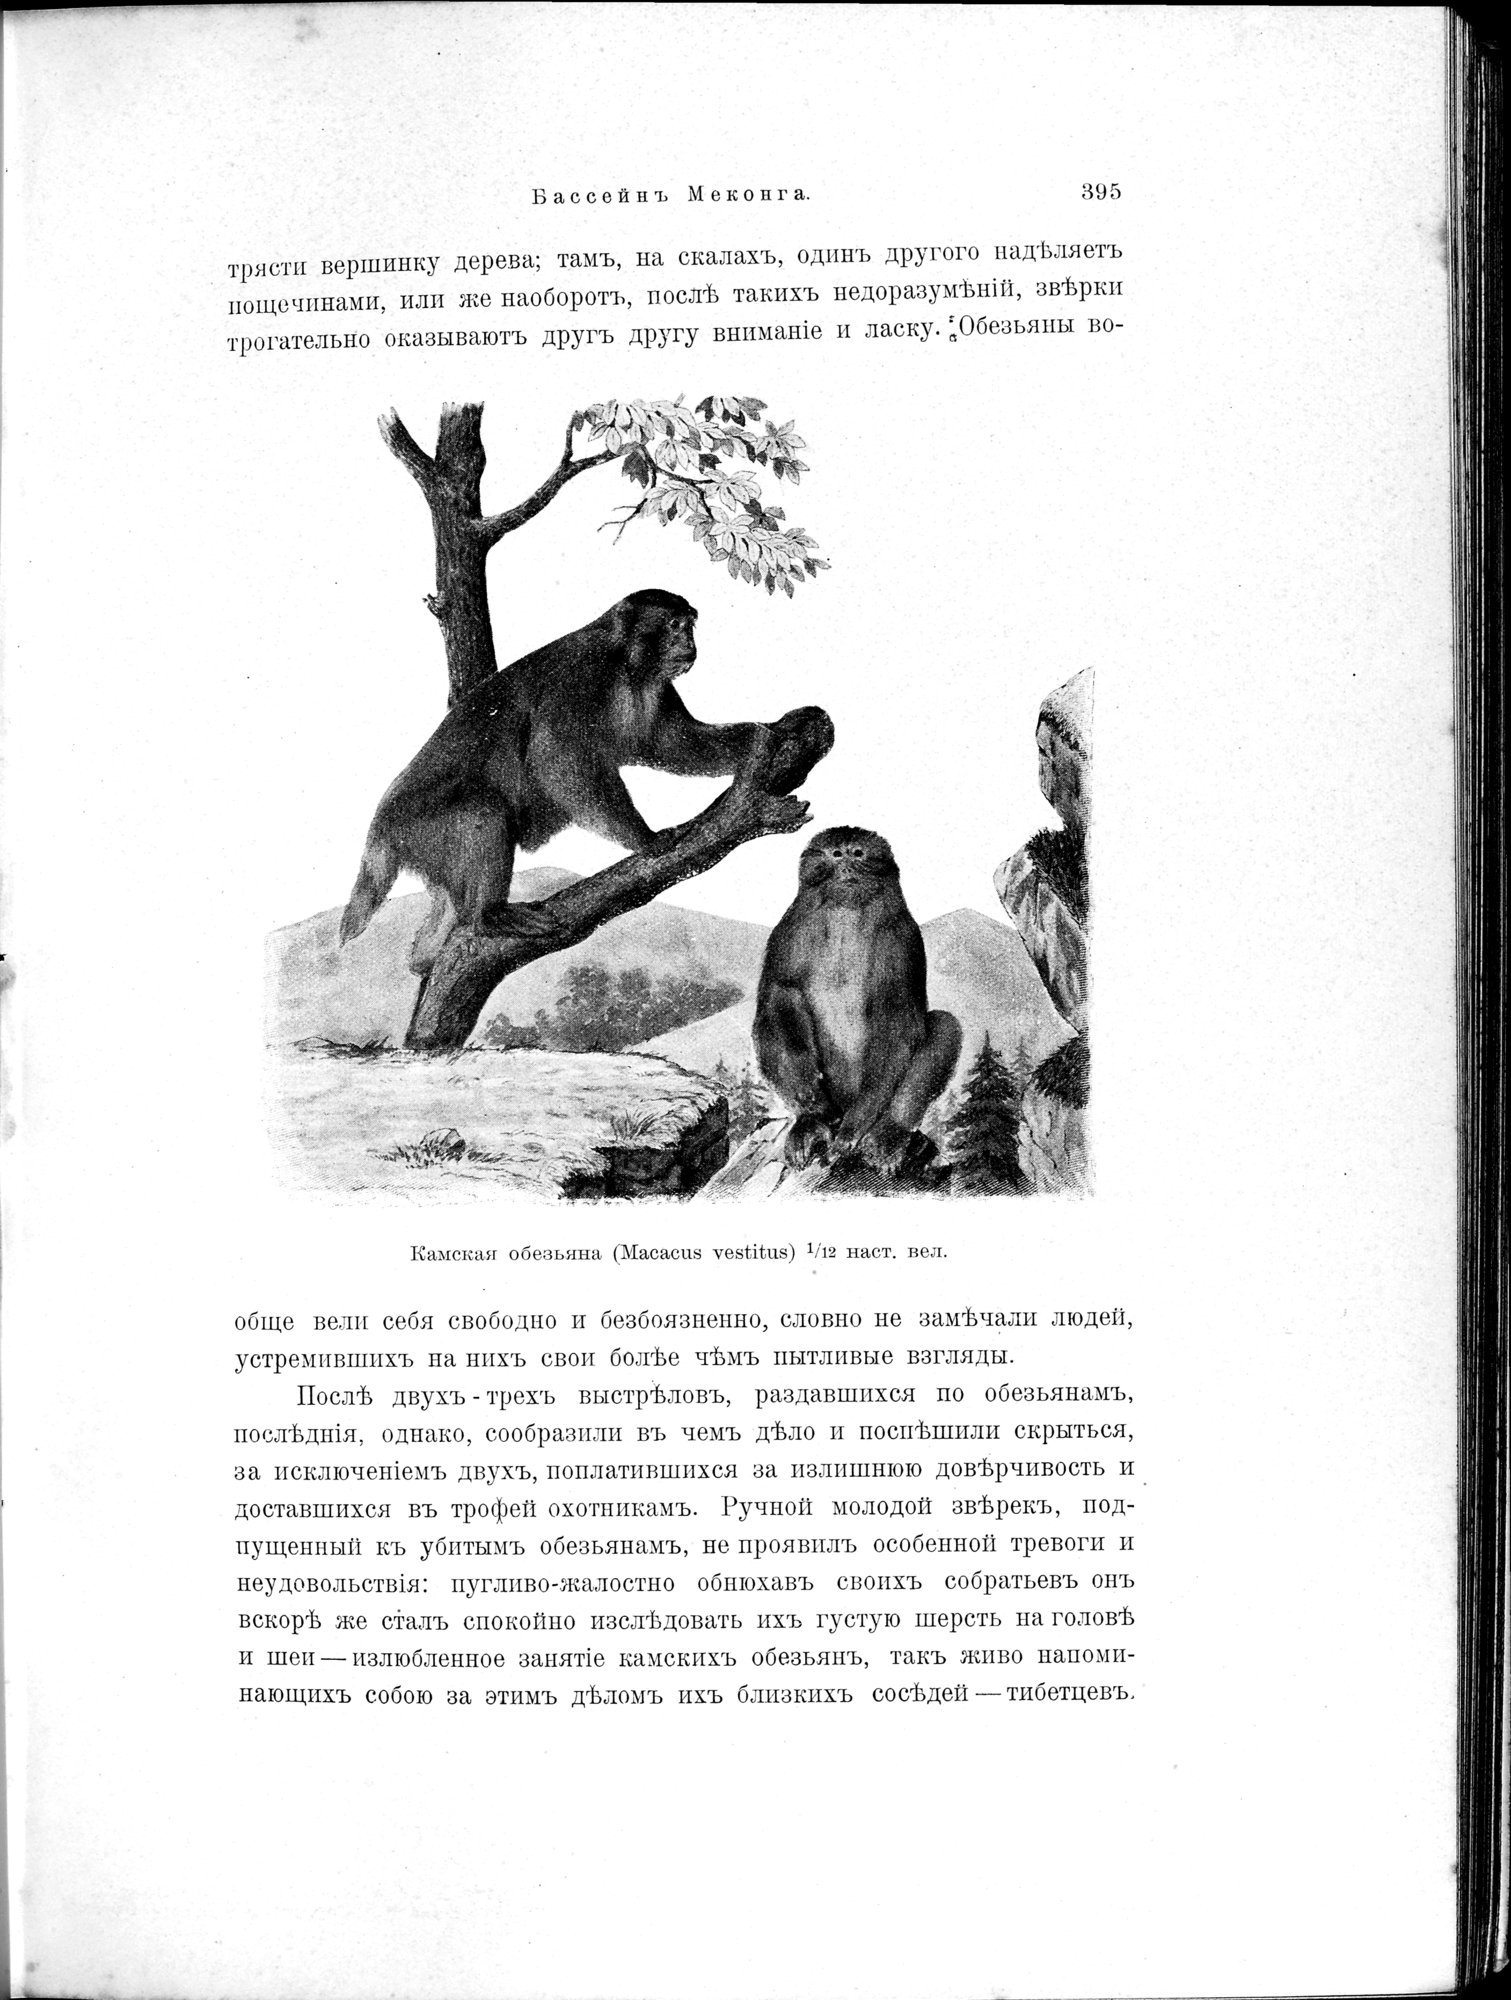 Mongoliia i Kam : vol.2 / Page 187 (Grayscale High Resolution Image)